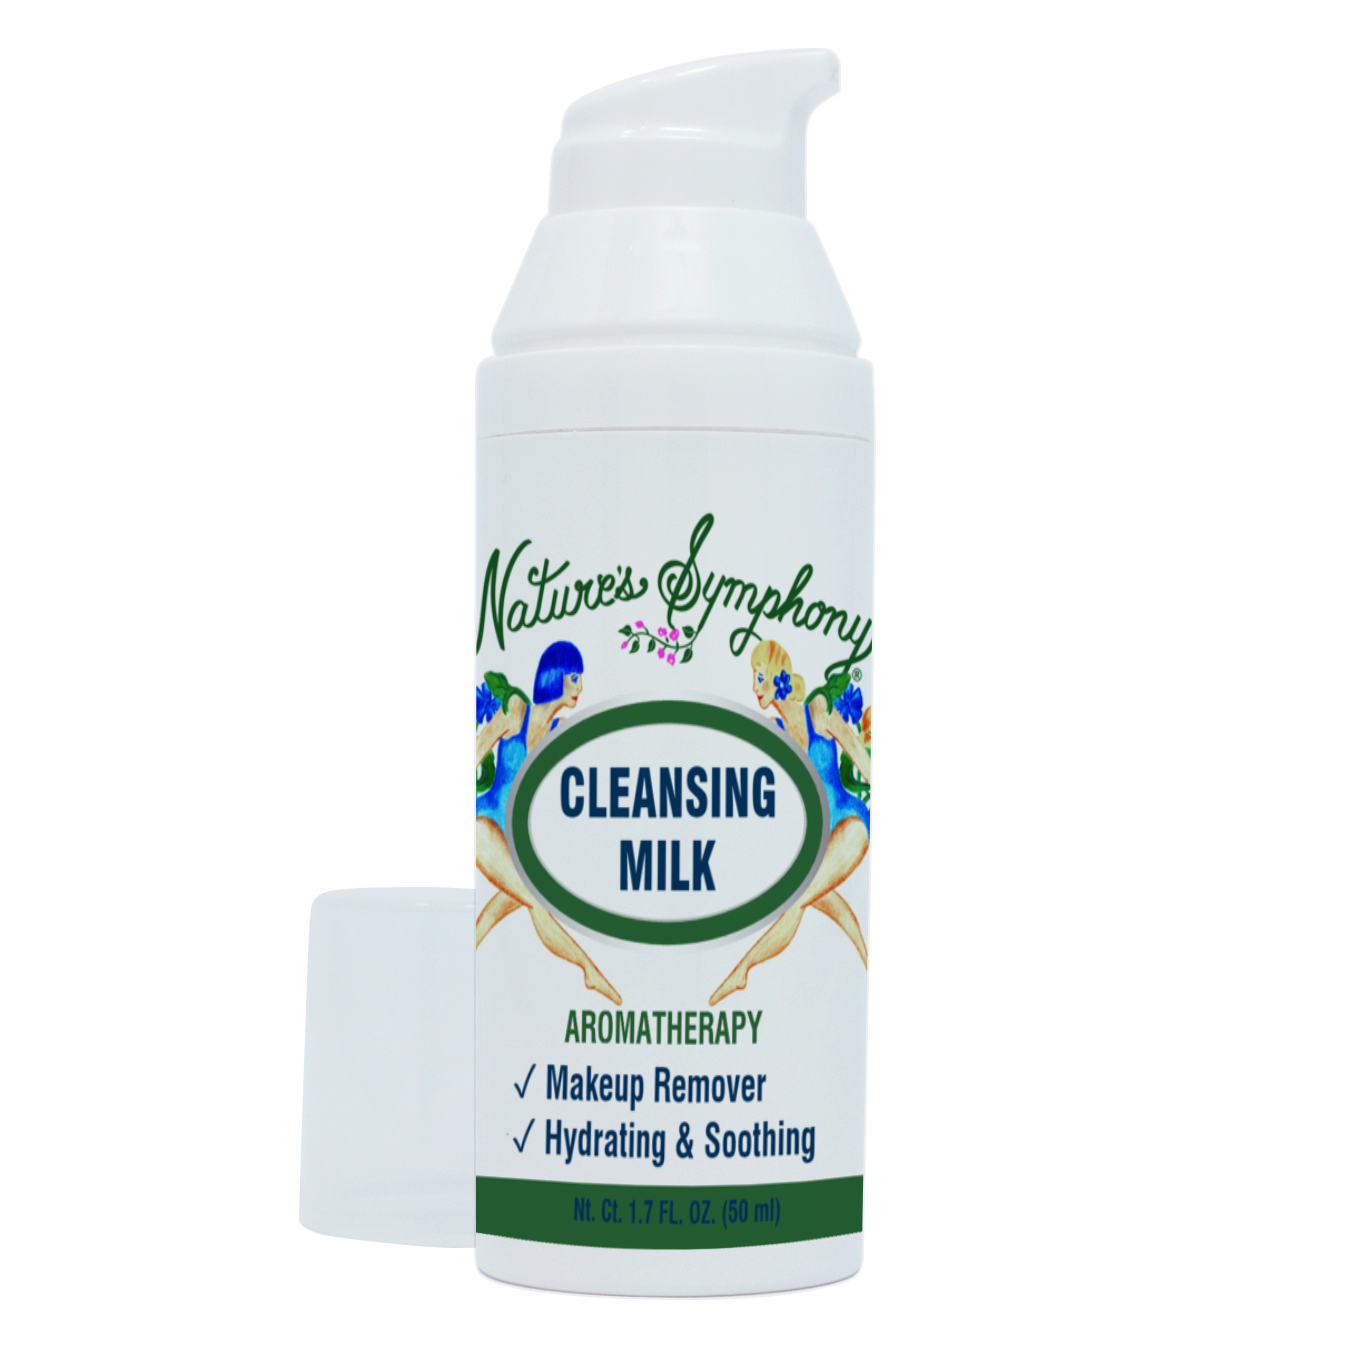 Cleansing Milk, All skin types - 1.7 fl. oz. (50ml)